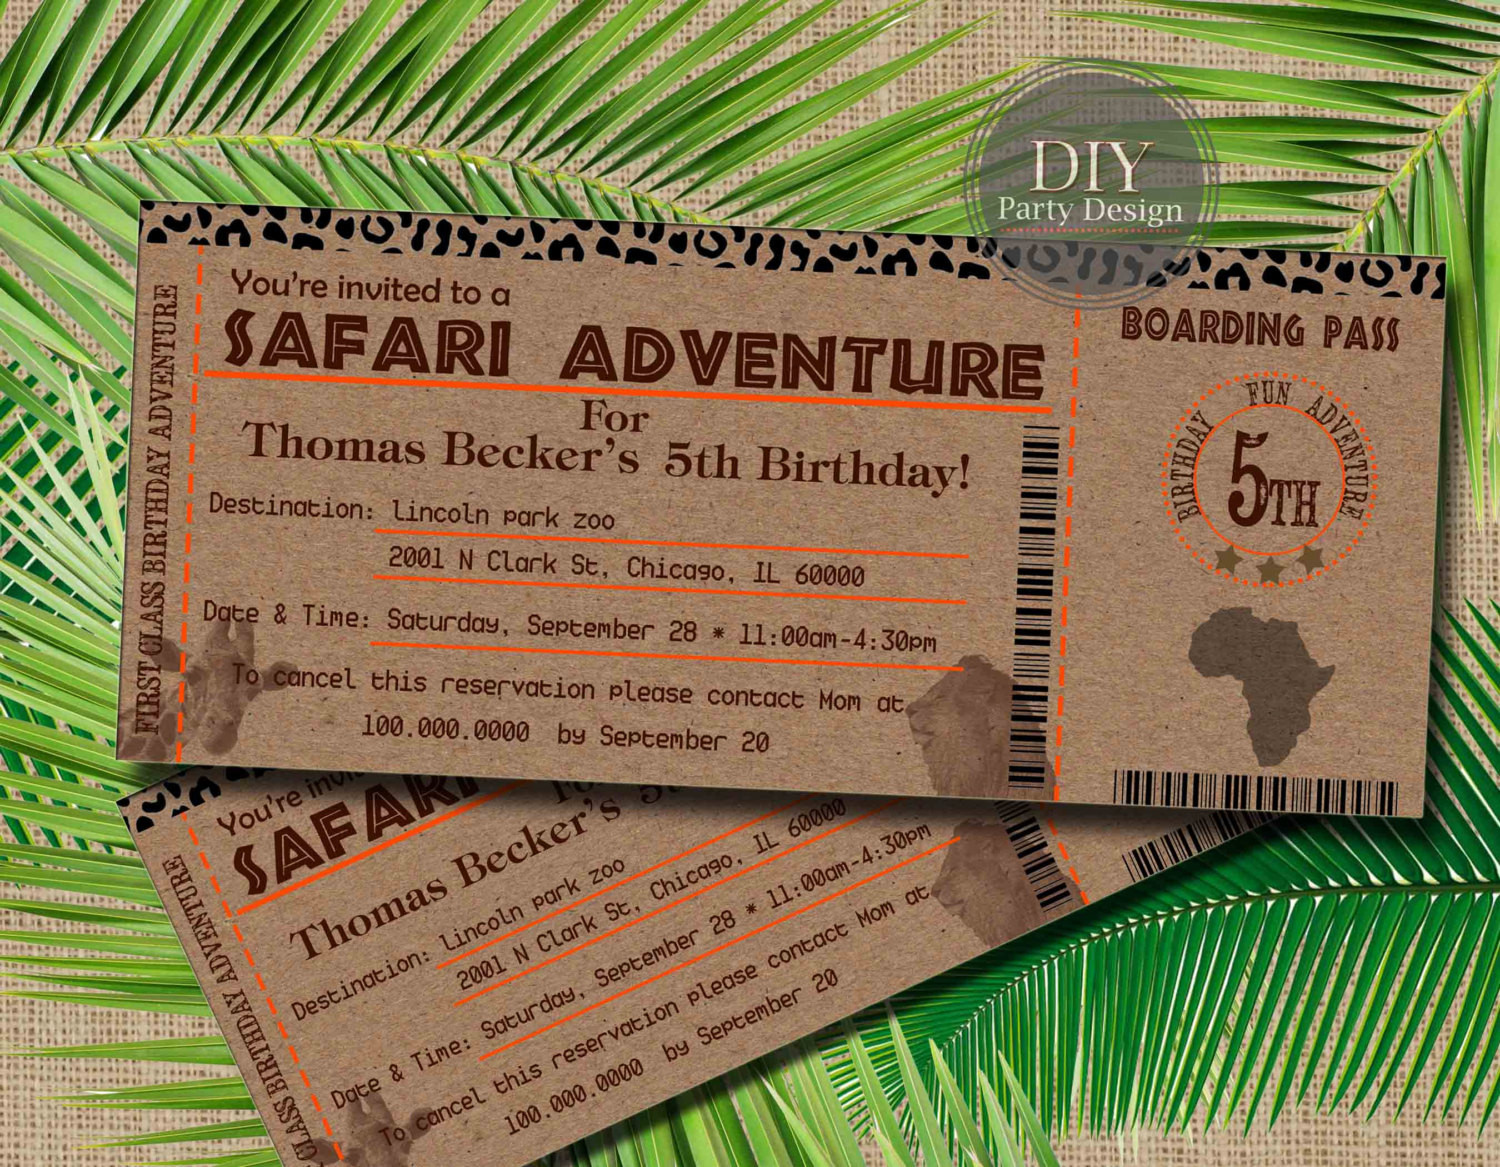 Best ideas about Safari Birthday Invitations
. Save or Pin Safari Ticket Birthday Invitation Baby Shower Invitation Now.